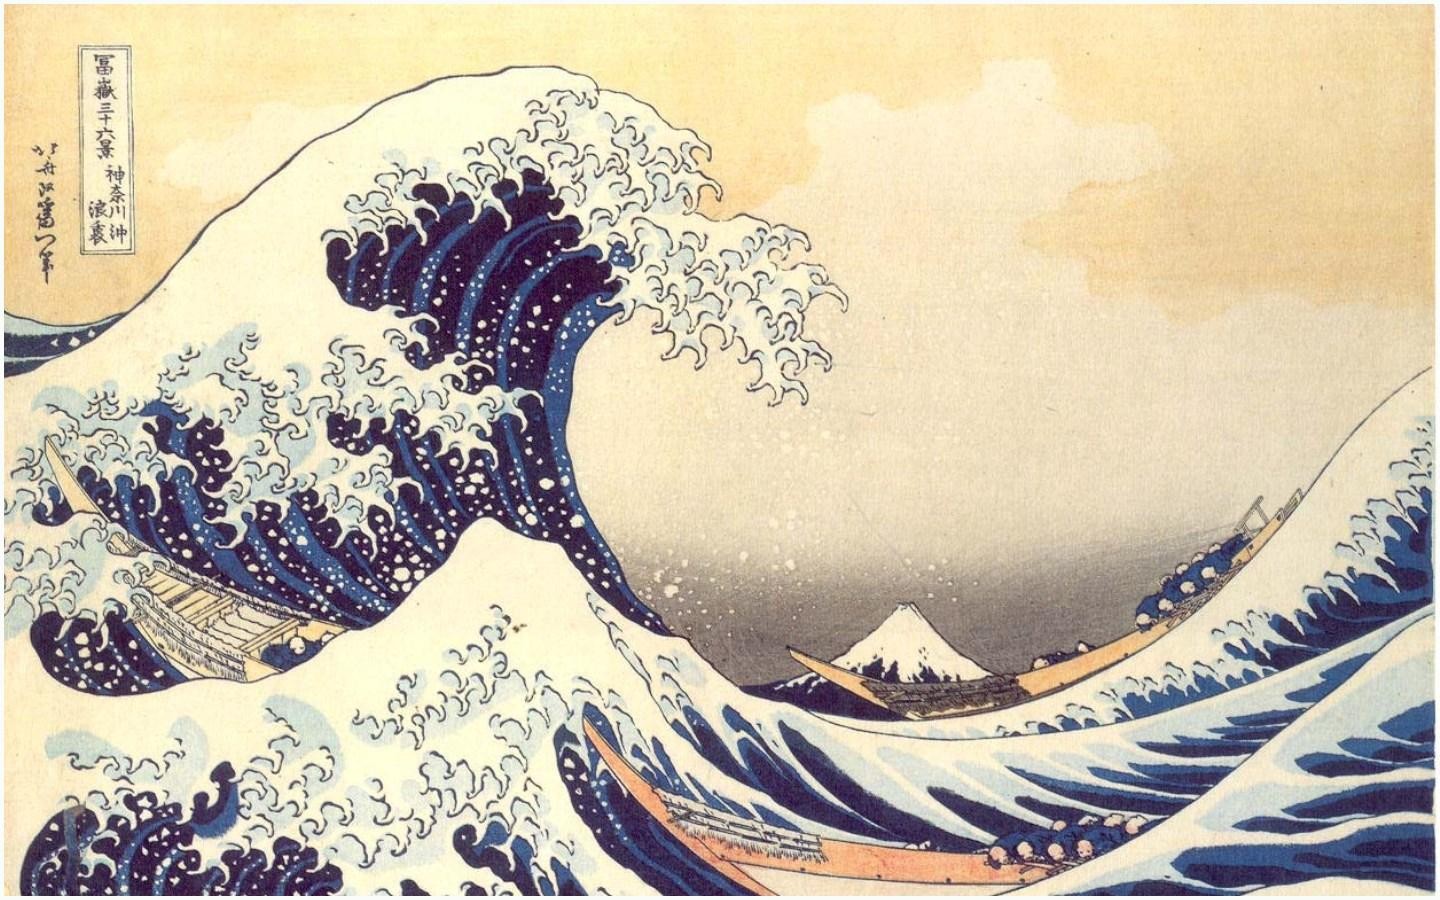 General 1440x900 artwork Hokusai wood block Japan Asia waves The Great Wave of Kanagawa Ukiyo-e